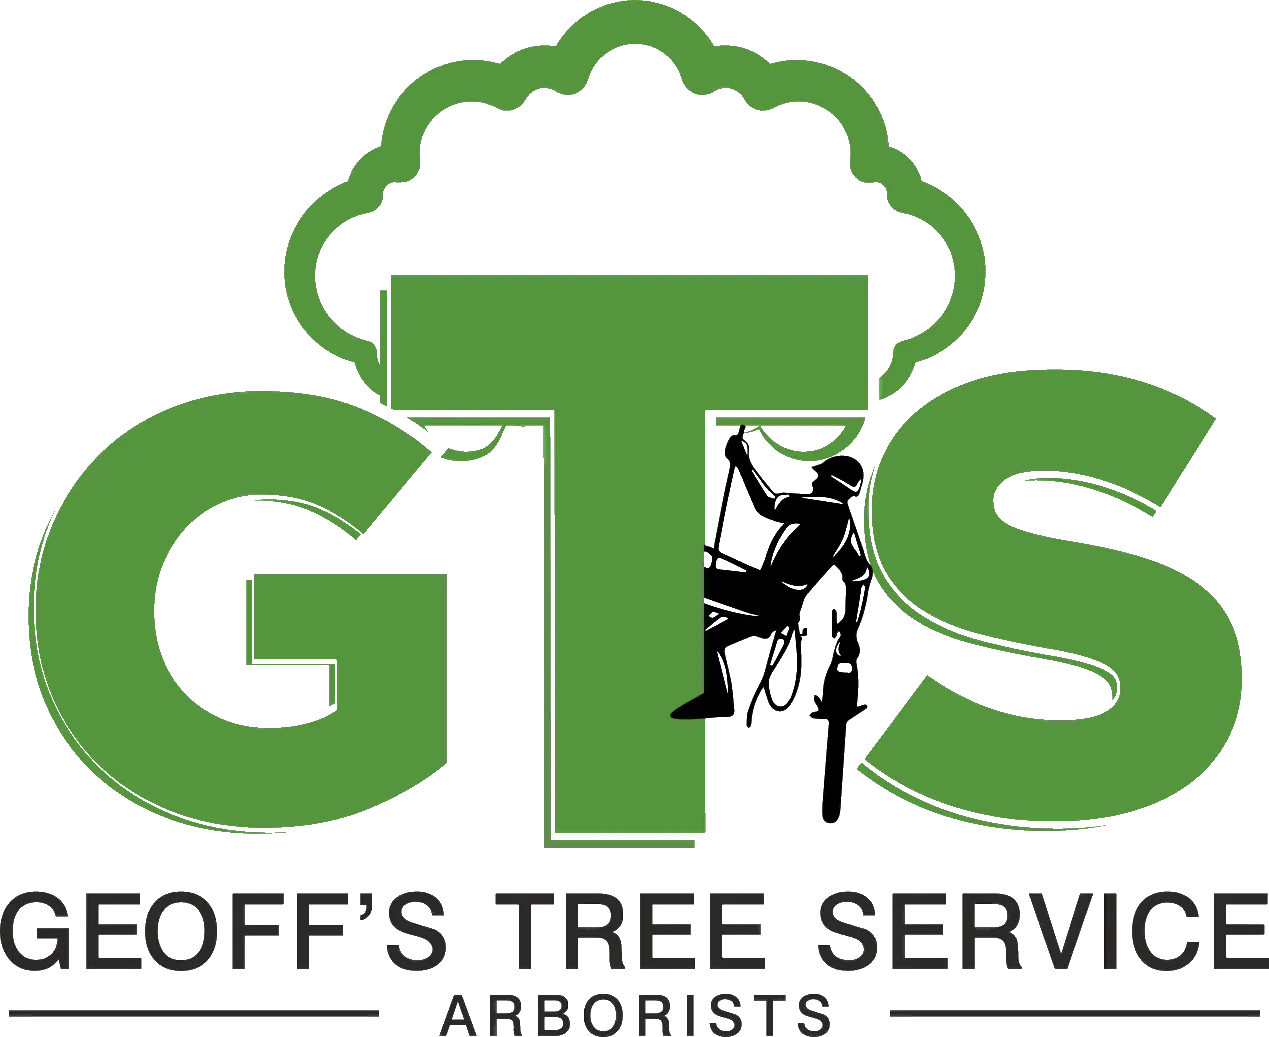 Geoff's Trees Service